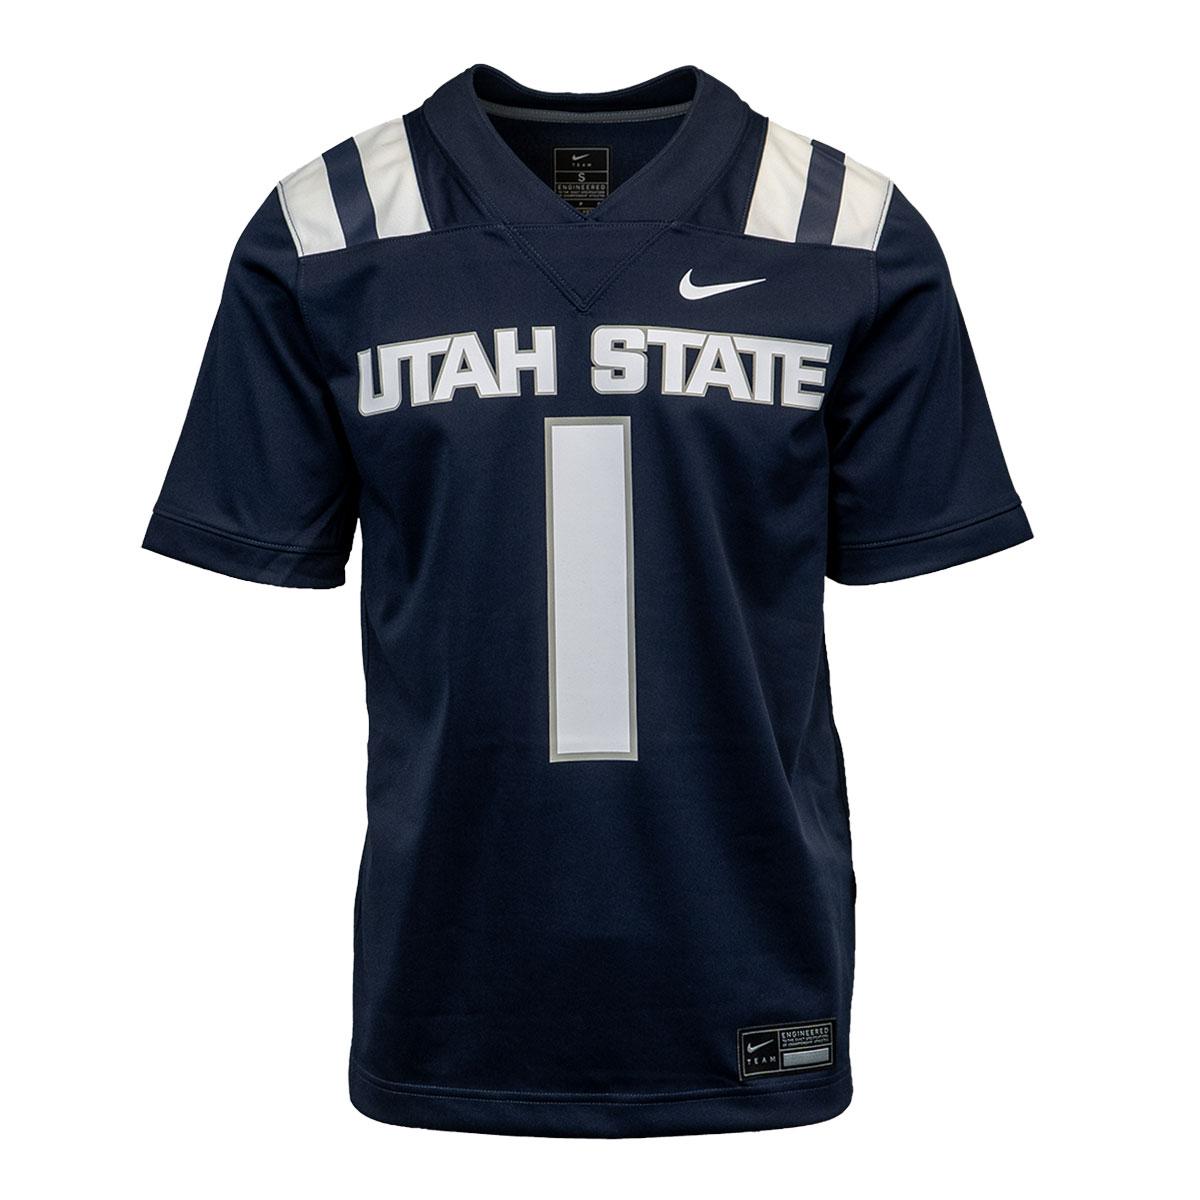 Men's Nike Sideline Utah State Replica Football Jersey